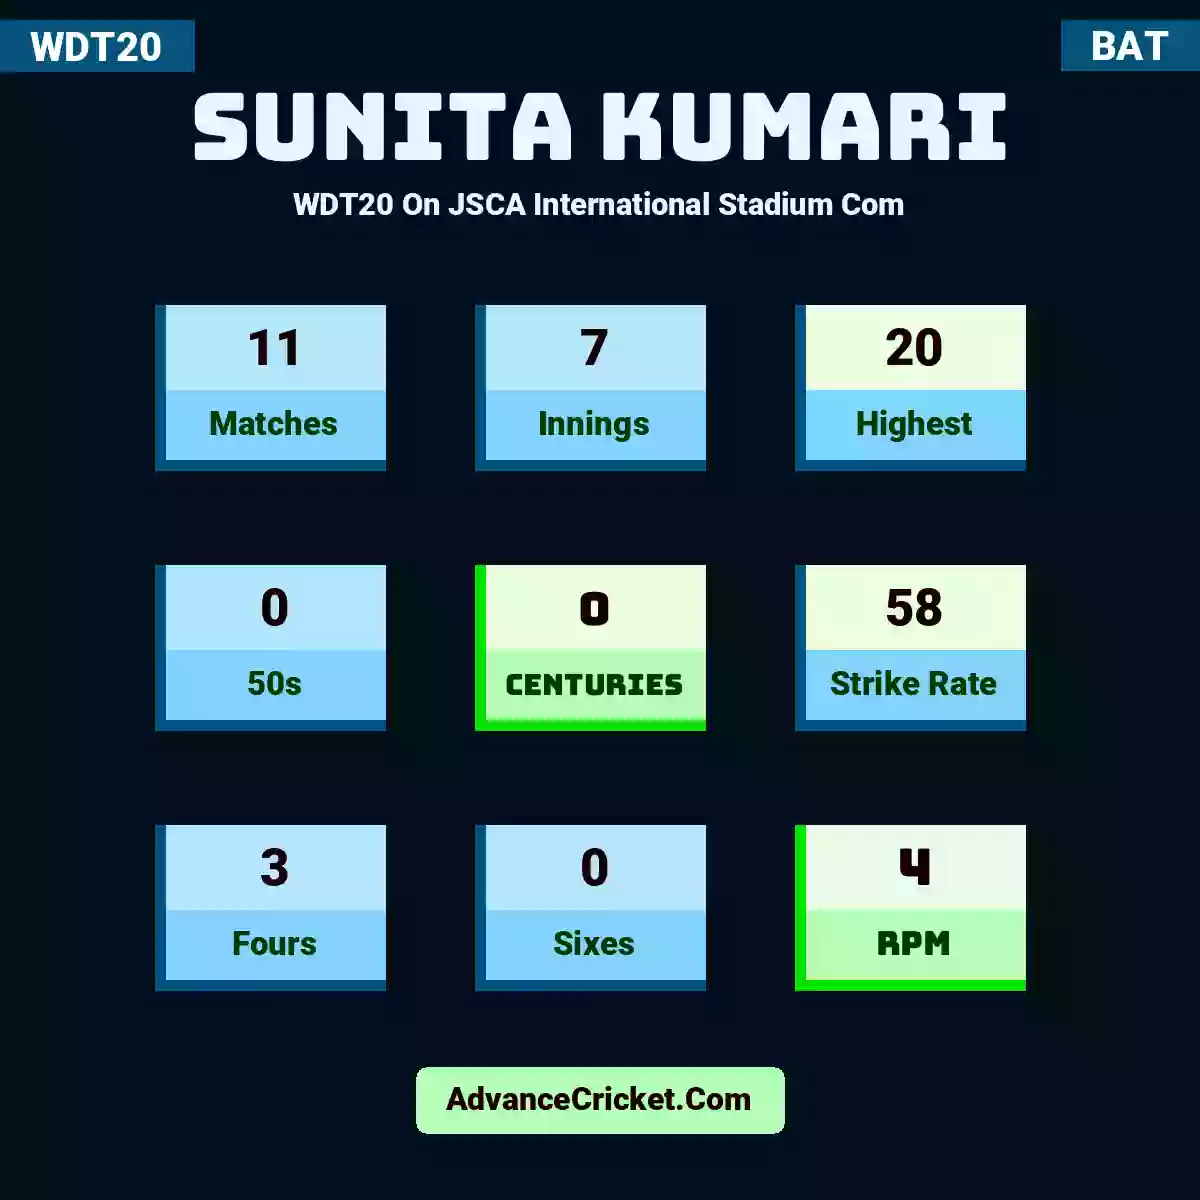 Sunita Kumari WDT20  On JSCA International Stadium Com, Sunita Kumari played 11 matches, scored 20 runs as highest, 0 half-centuries, and 0 centuries, with a strike rate of 58. S.Kumari hit 3 fours and 0 sixes, with an RPM of 4.